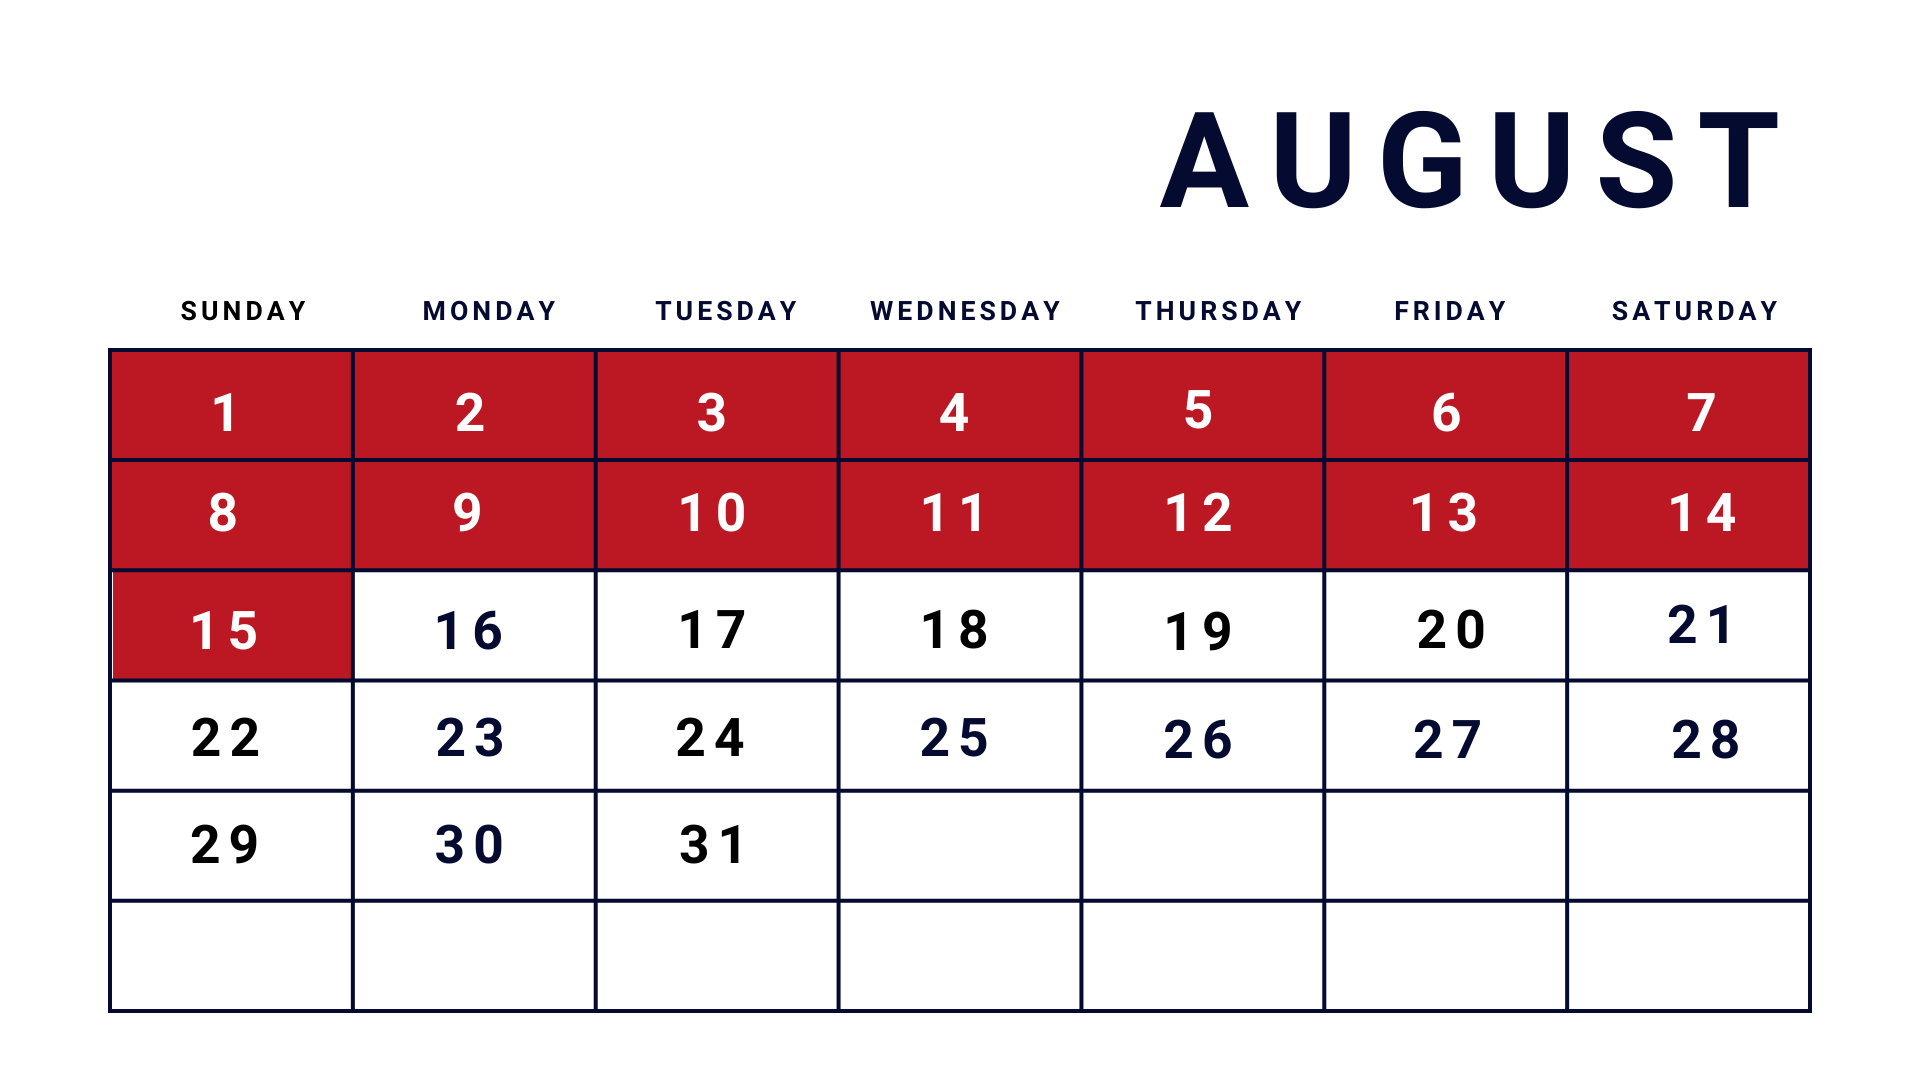 August Meal Calendar